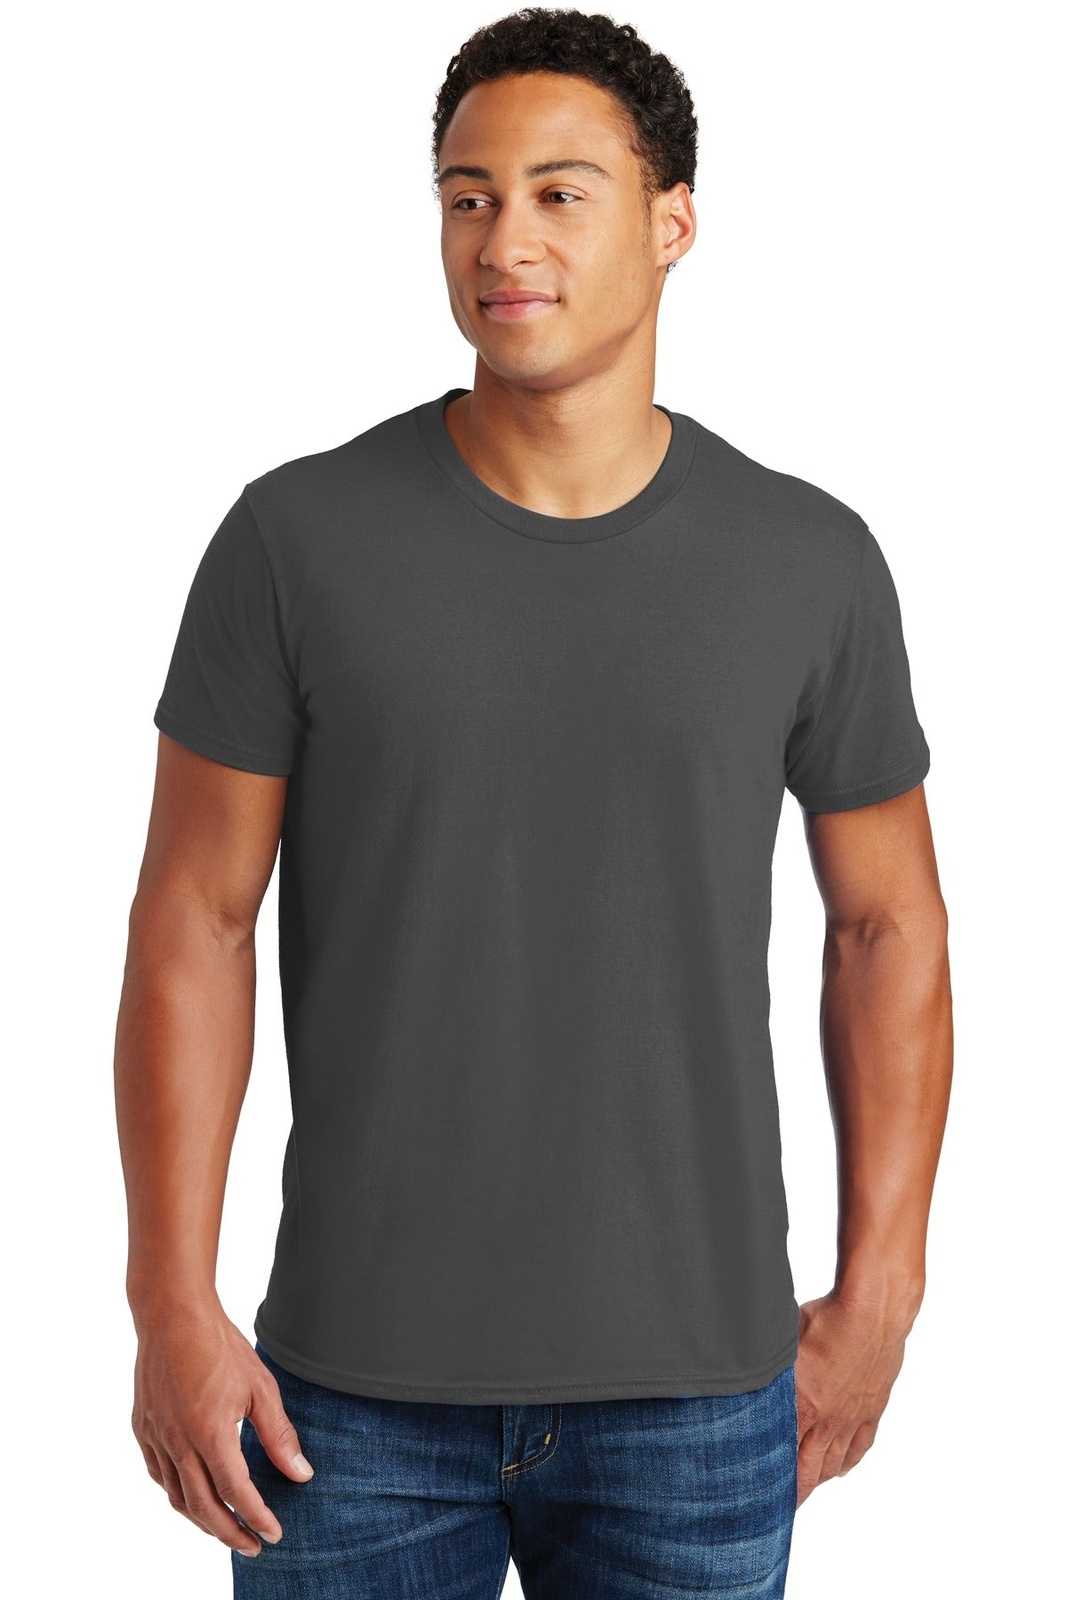 Hanes 4980 Nano-T Cotton T-Shirt - Smoke Gray - HIT a Double